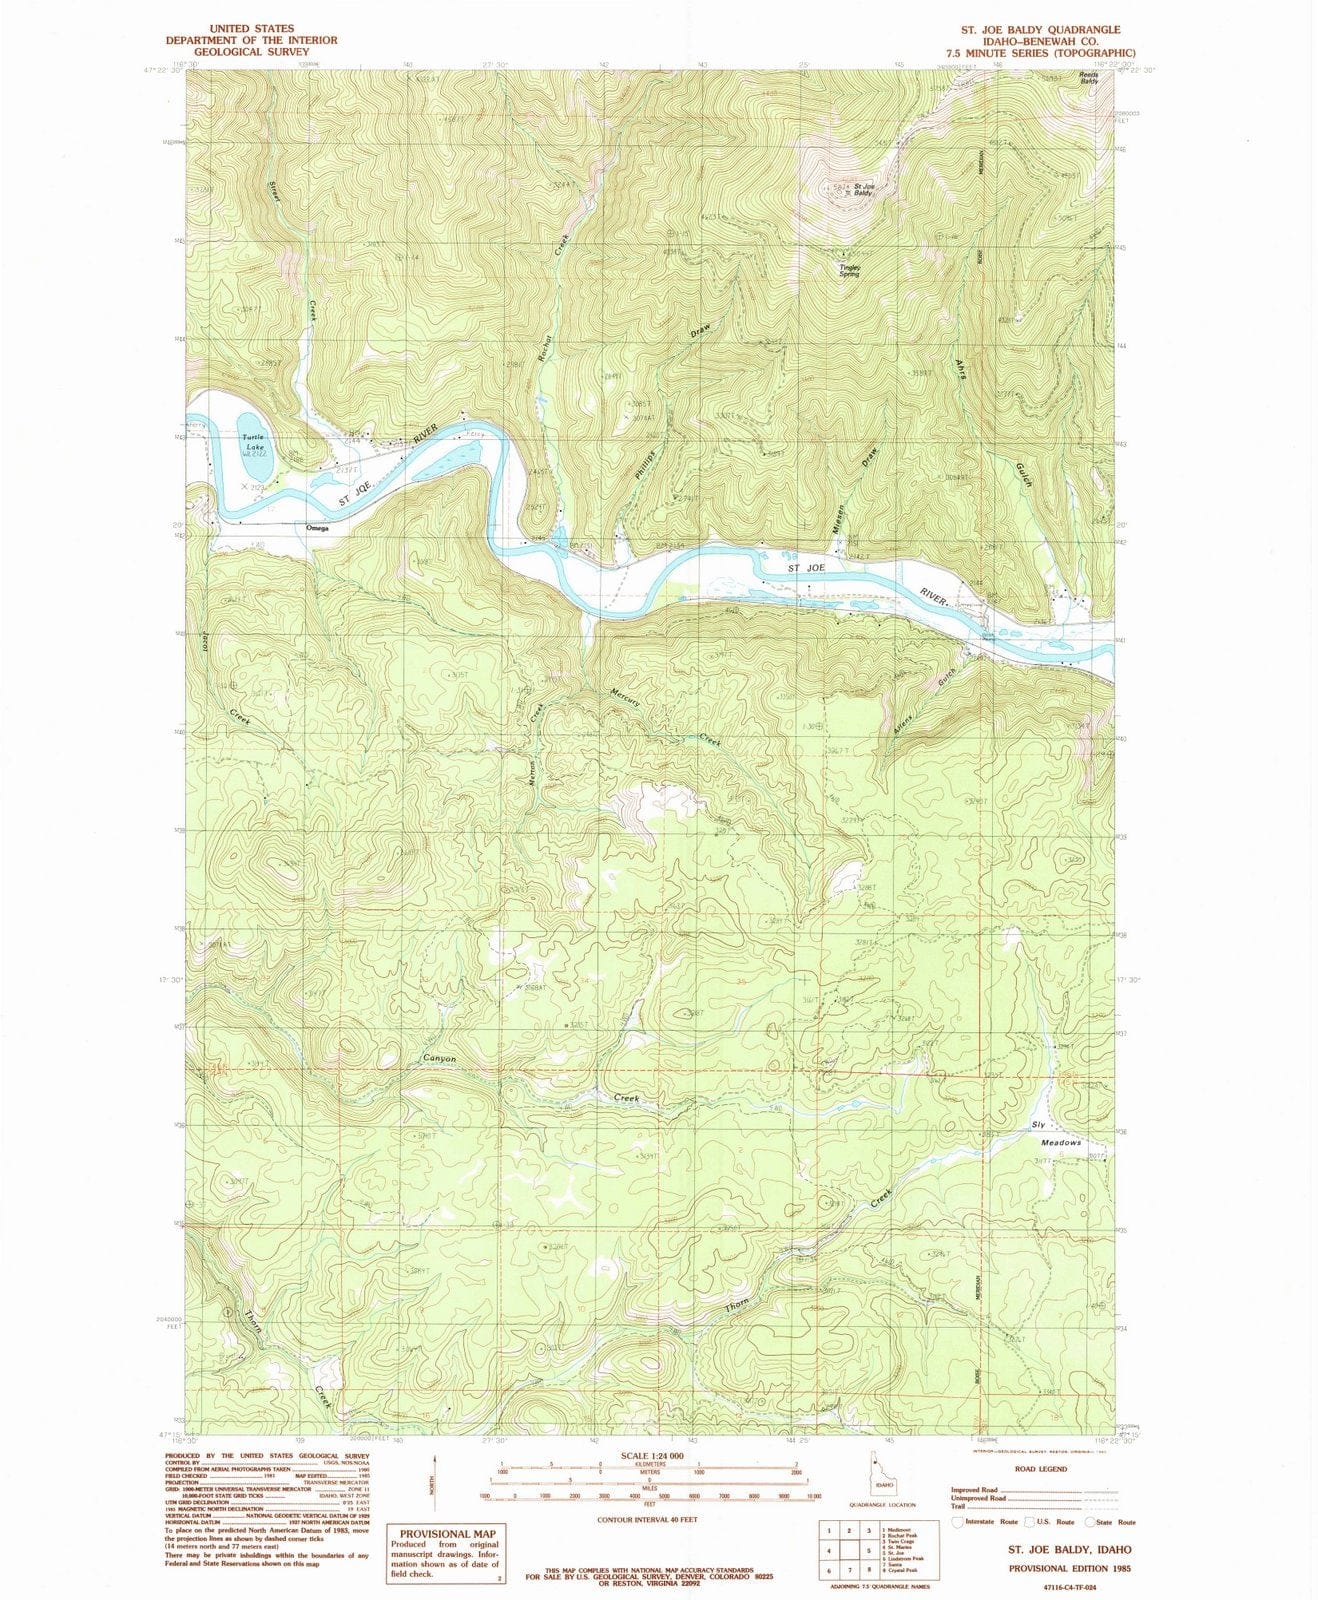 1985 St. Joe Baldy, ID - Idaho - USGS Topographic Map